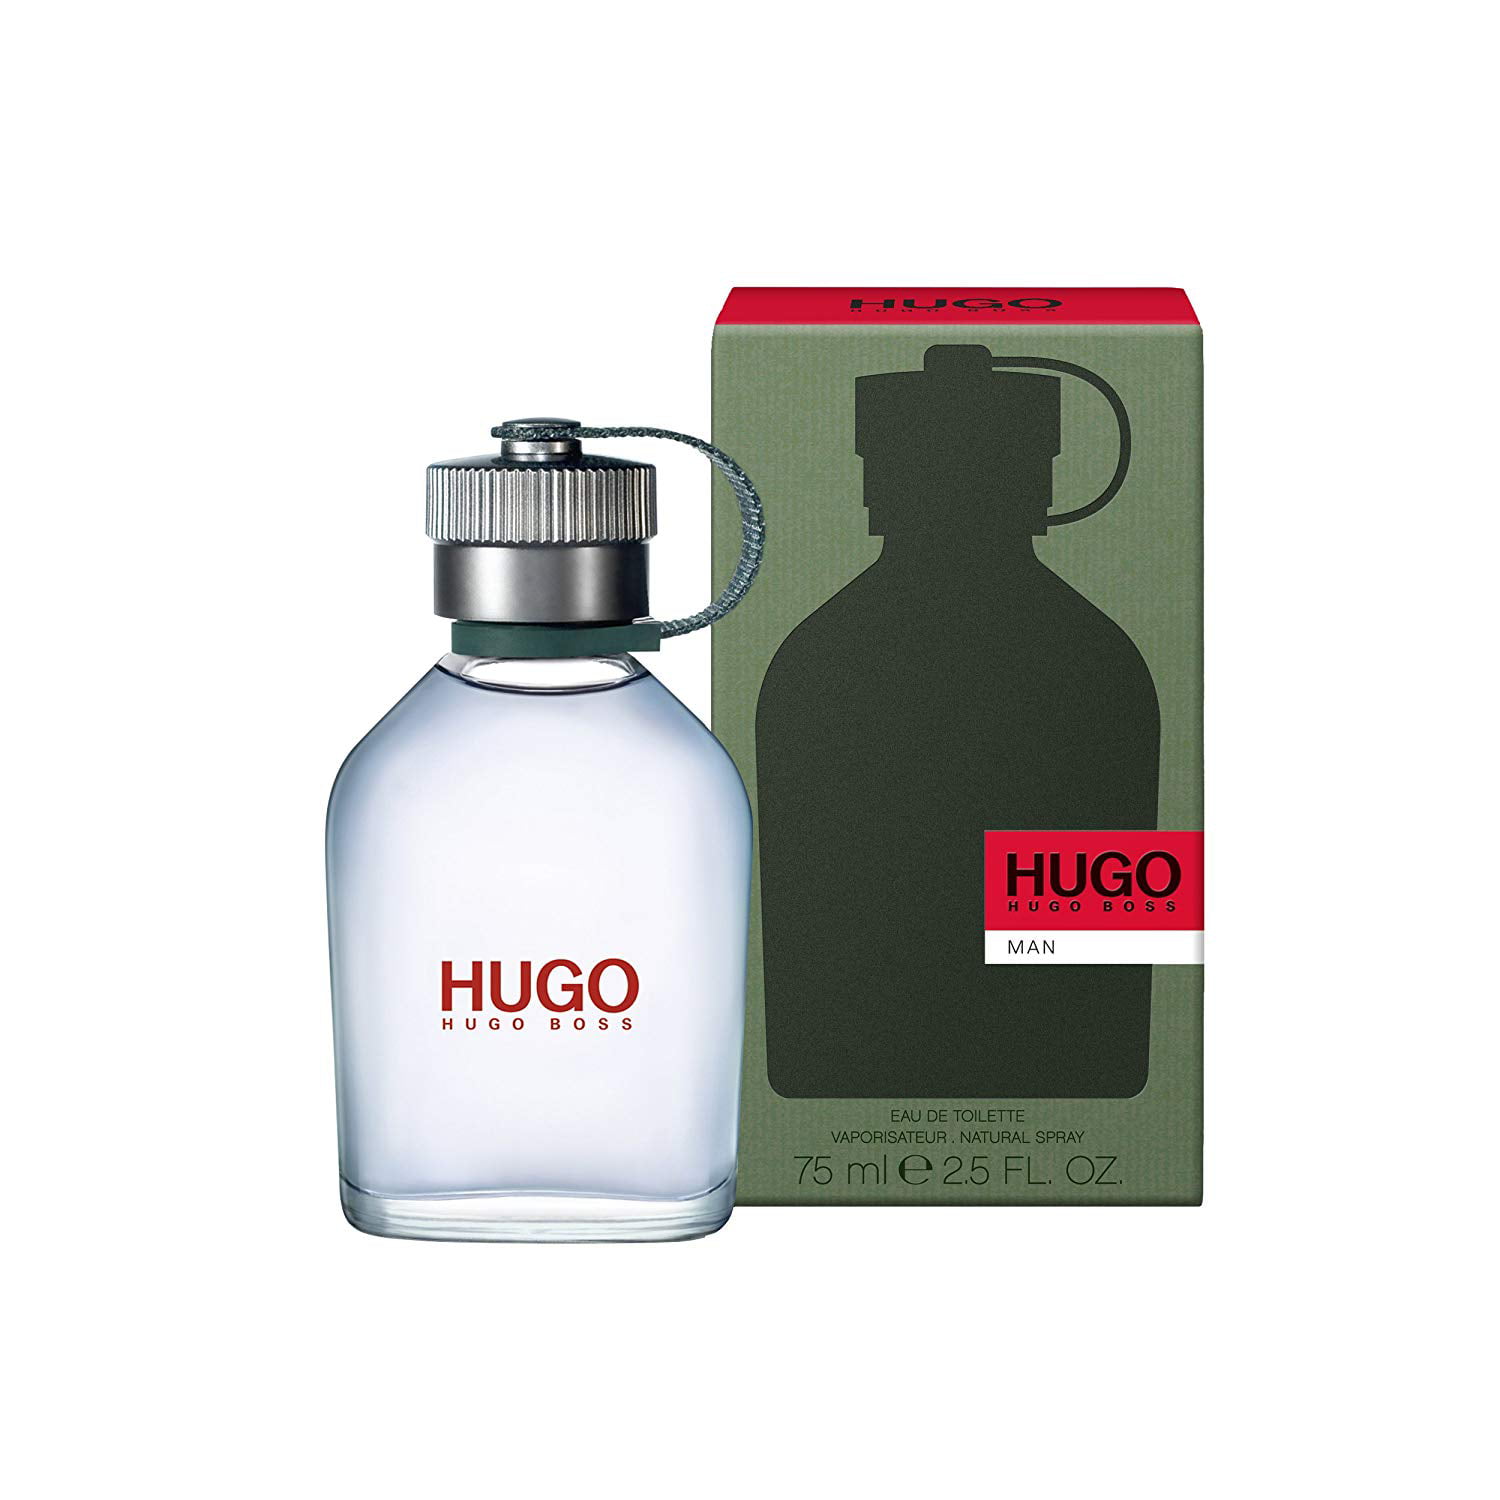 Hugo By Hugo Boss Eau De Toilette Spray 